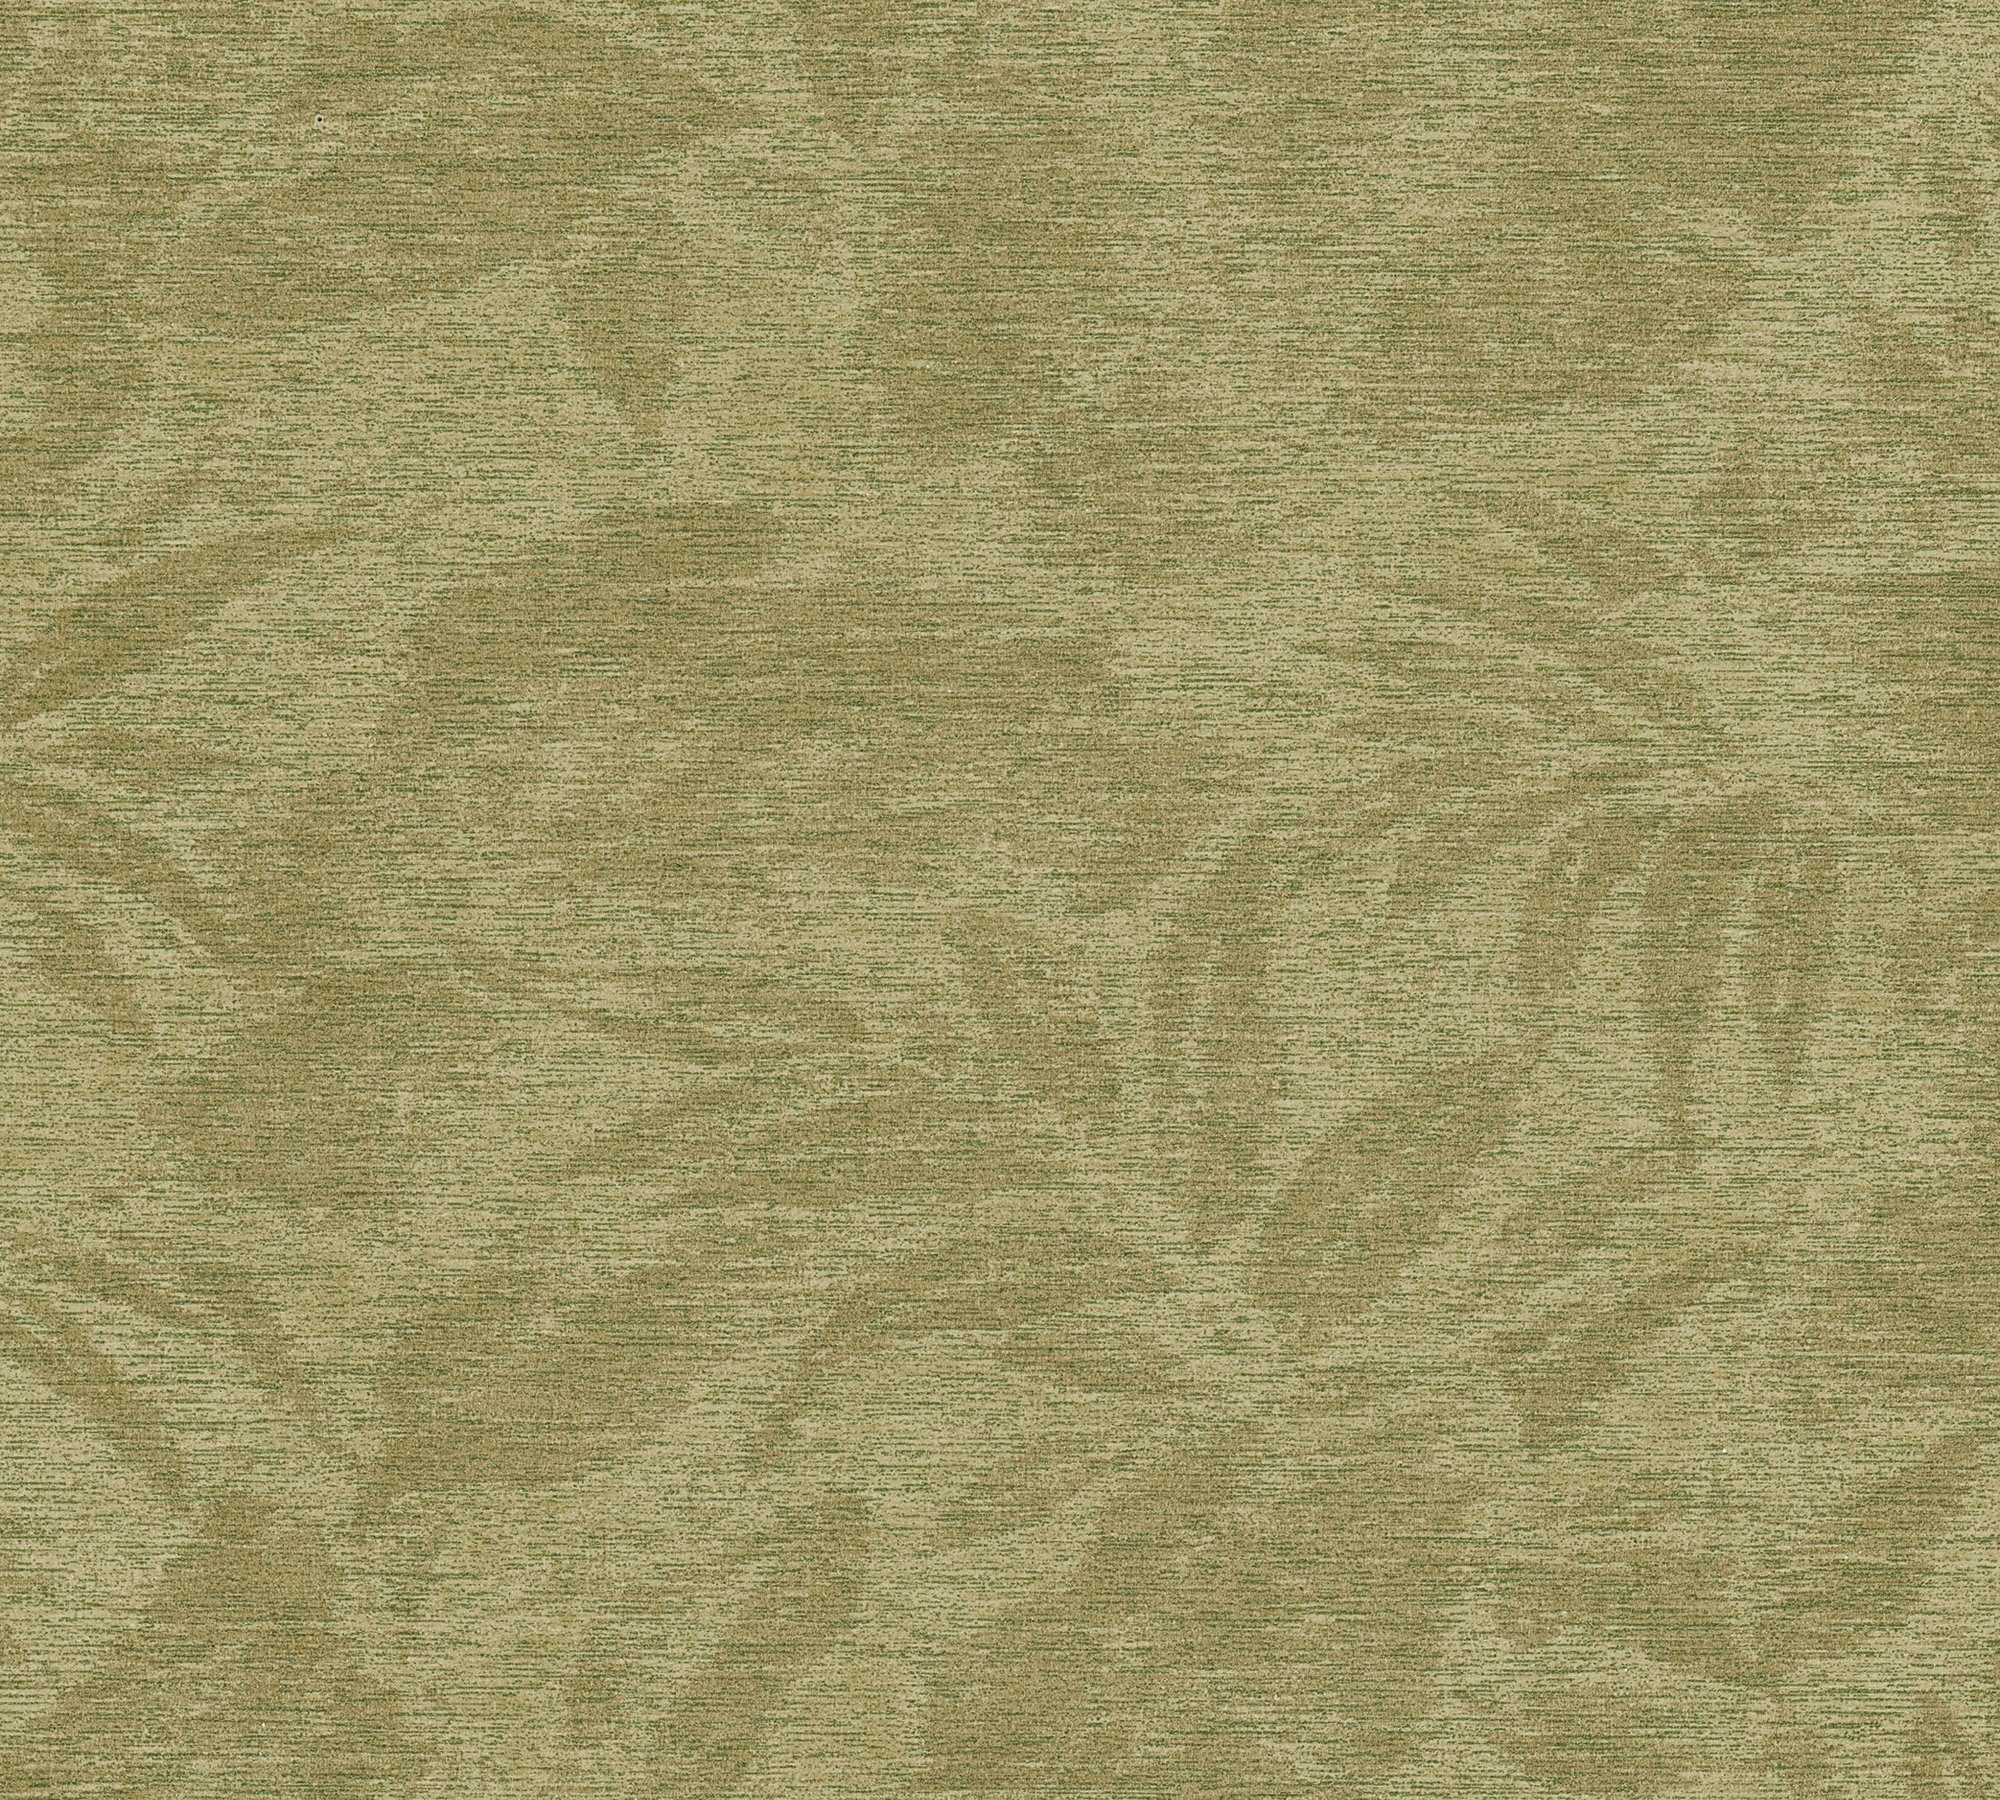 Dschungel mit Palmentapete Blätter Greenery Création Motiv, A.S. Vliestapete grün/beige floral, Tapete